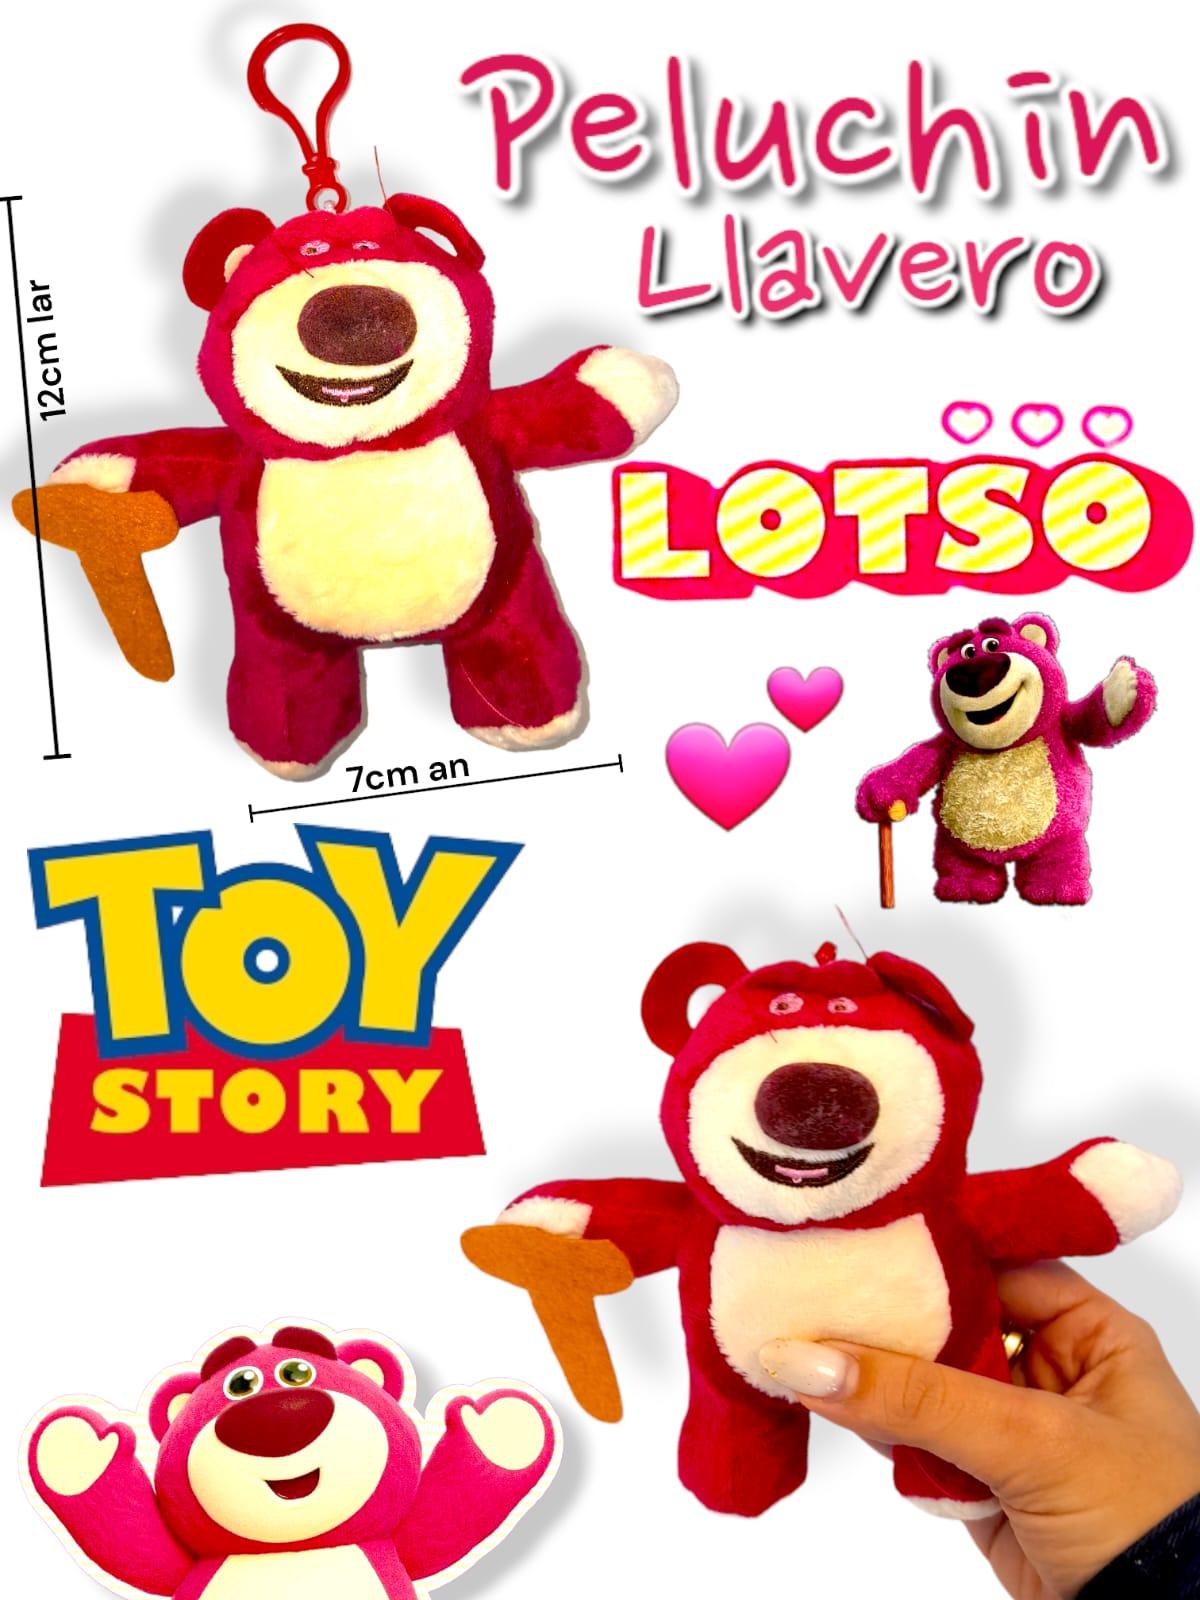 Peluchin Llavero LOTSO Toy Story